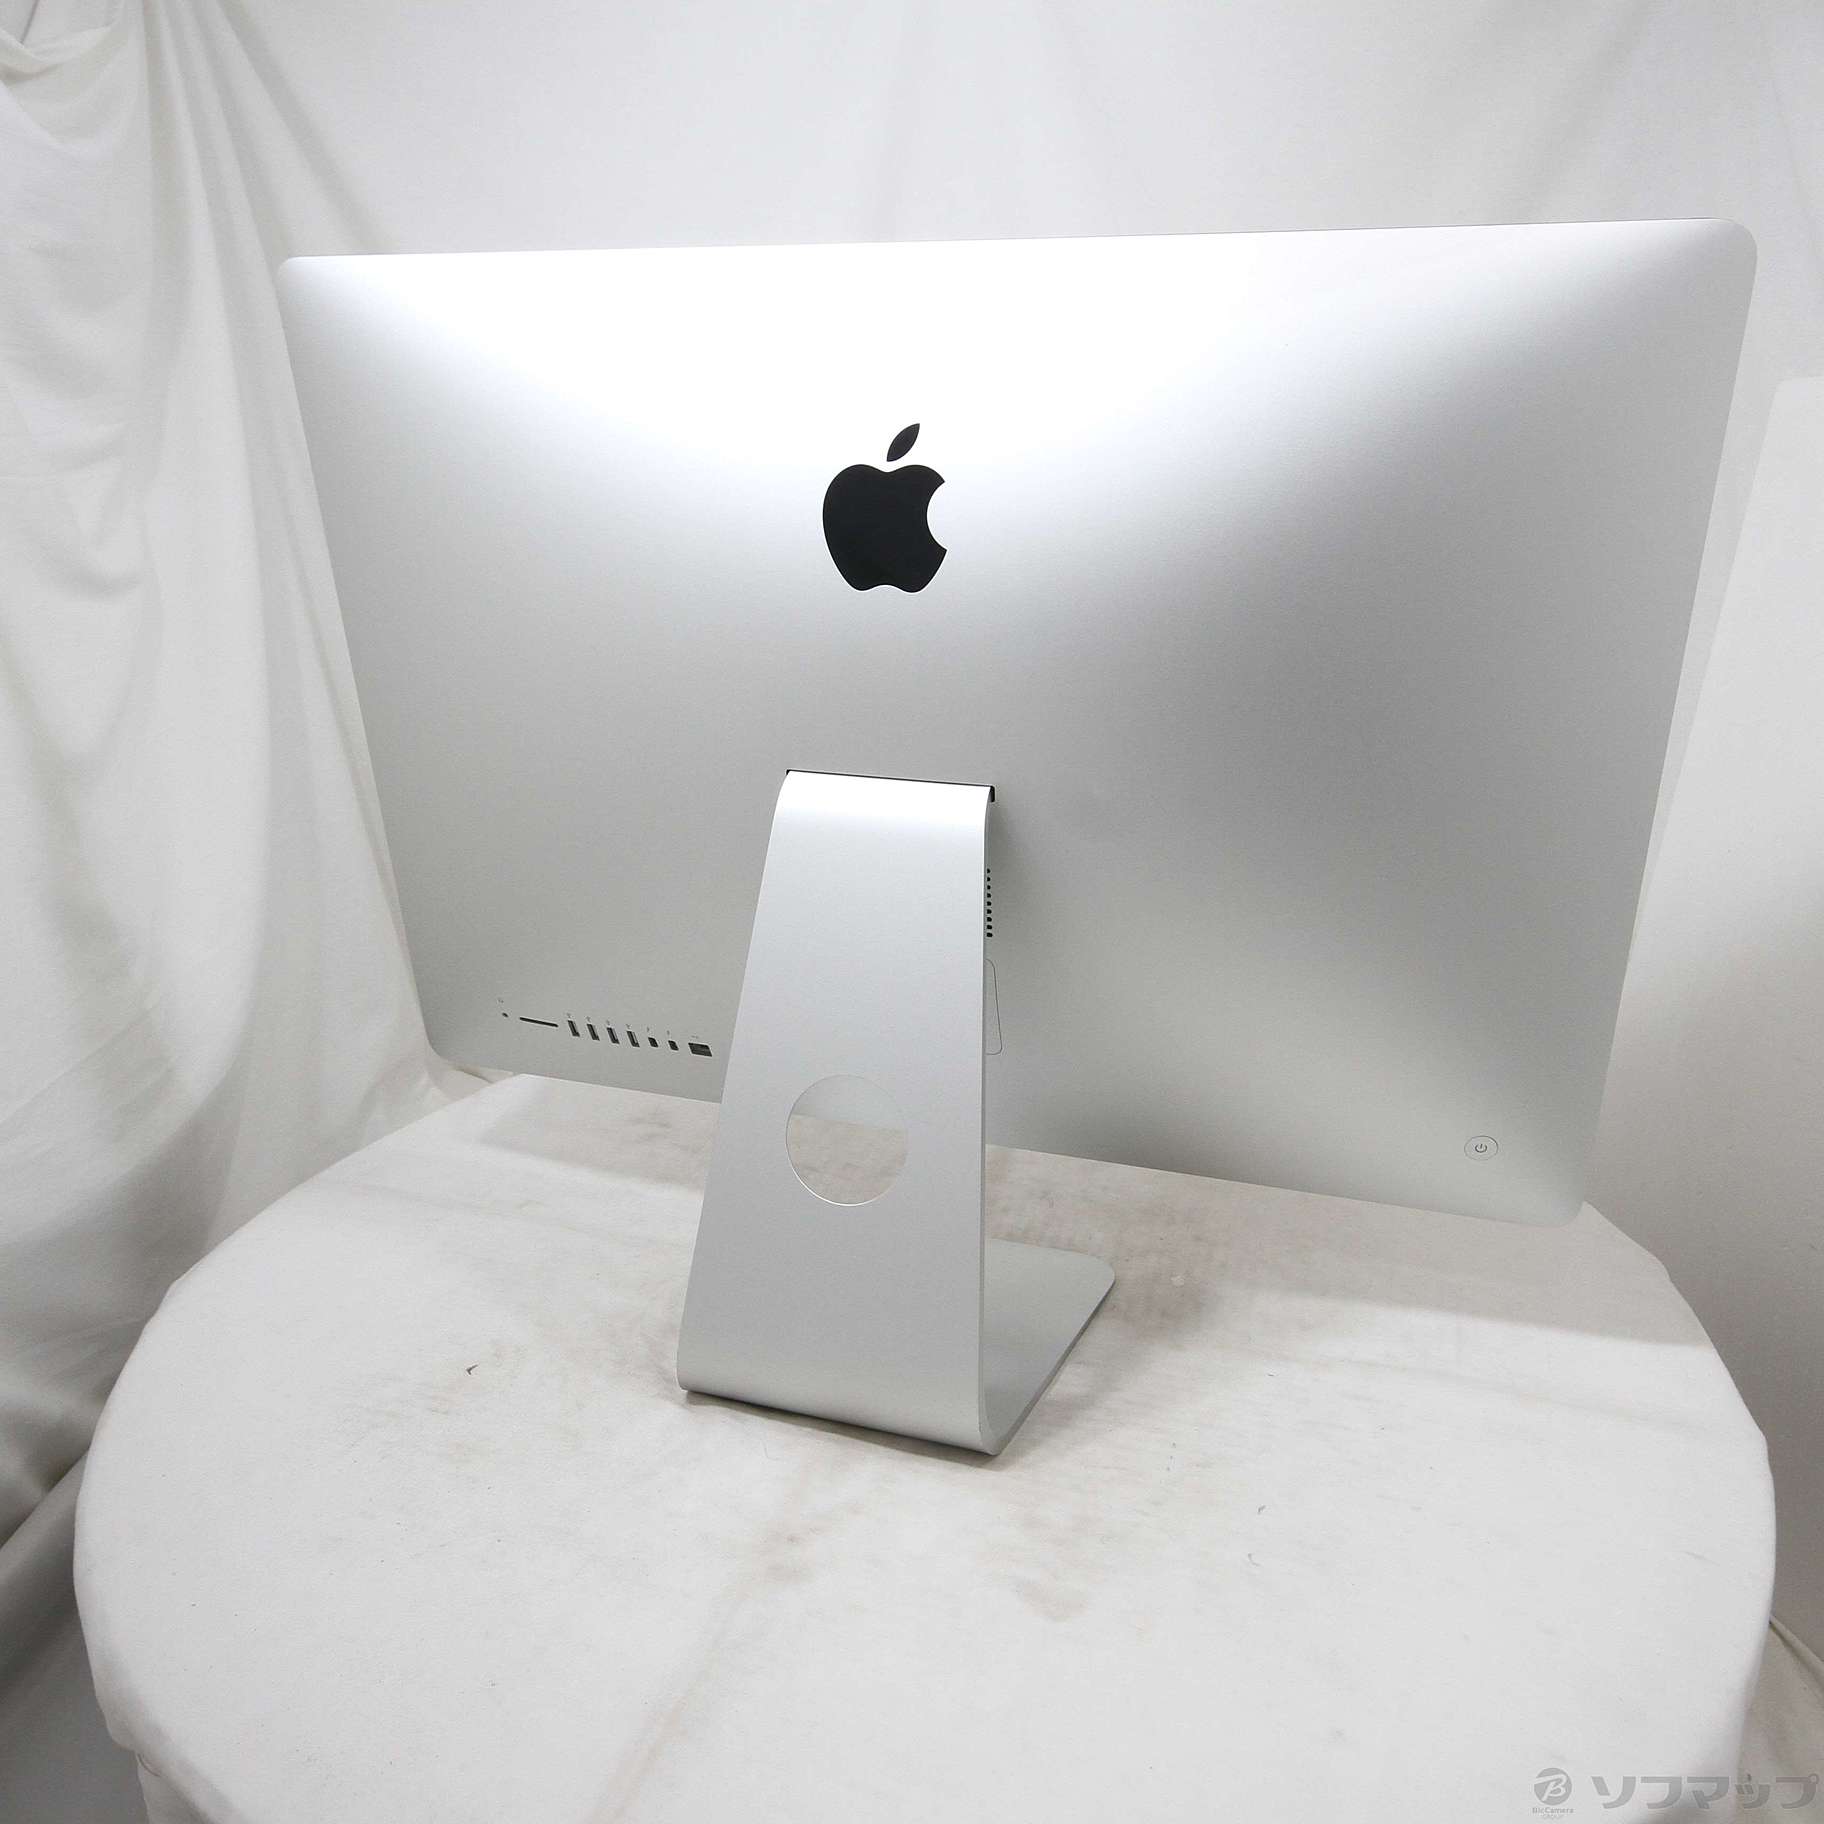 中古品〕 iMac 27-inch Late 2015 MK462J／A Core_i5 3.2GHz 8GB ...